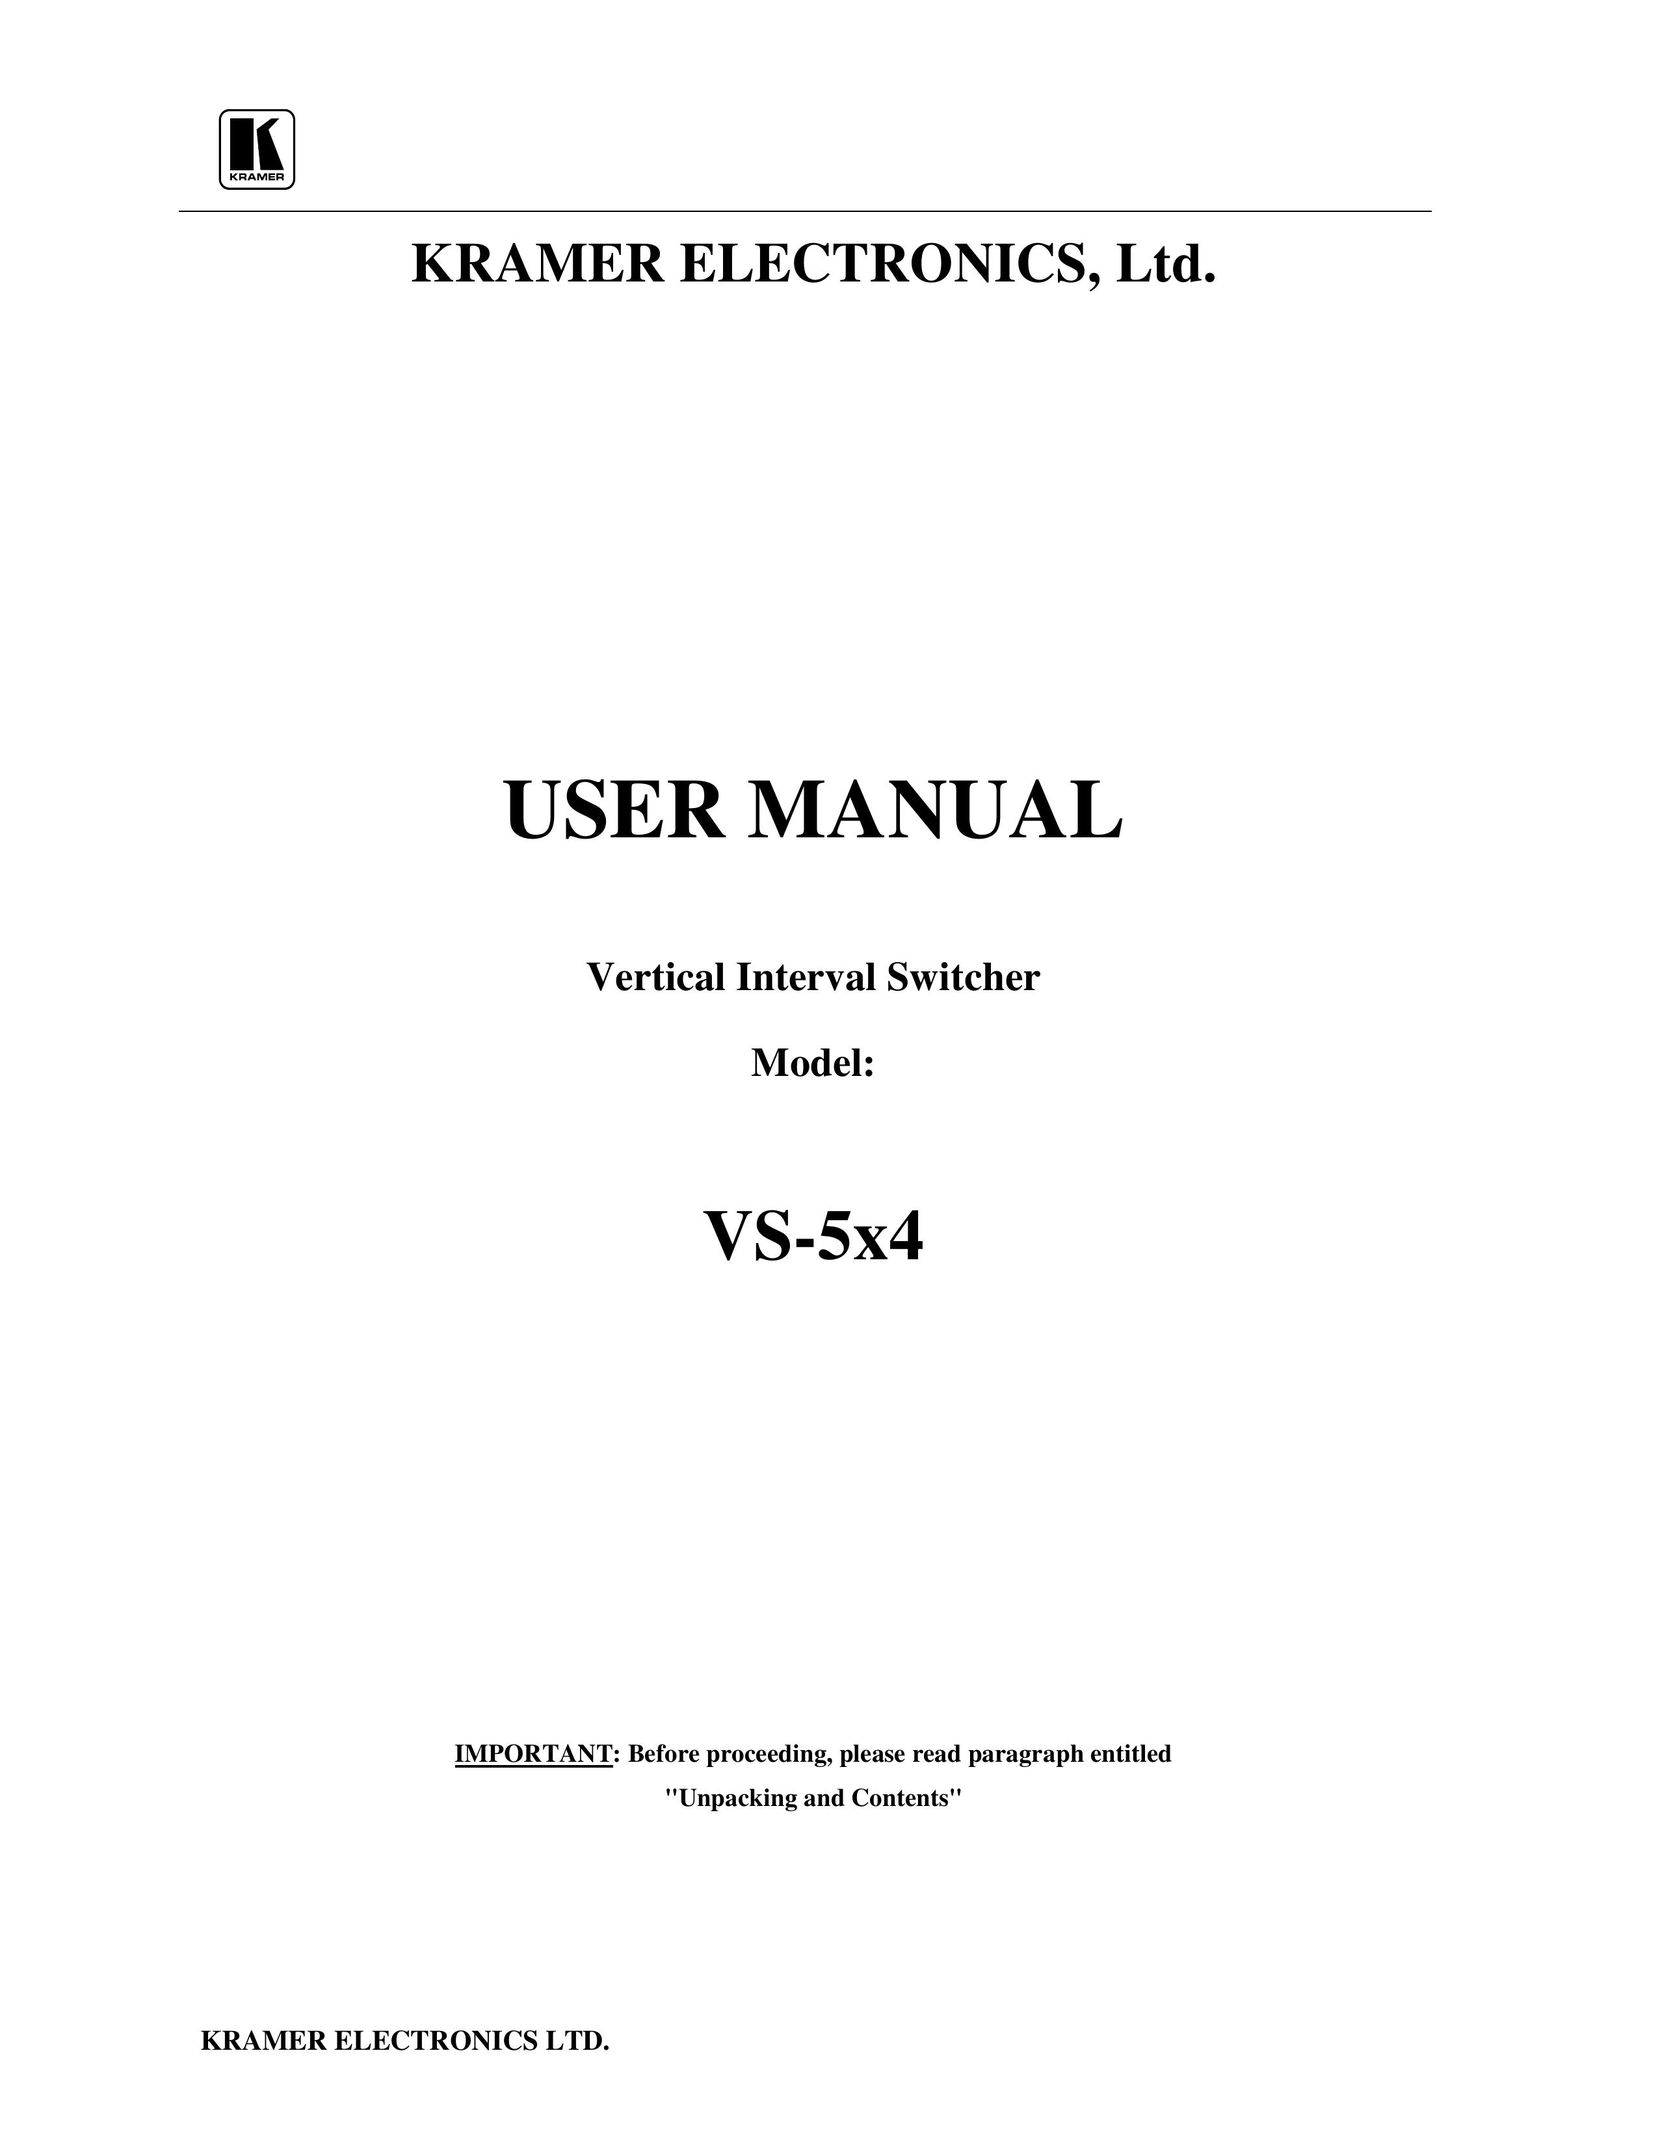 Kramer Electronics VS-5x4 Saw User Manual